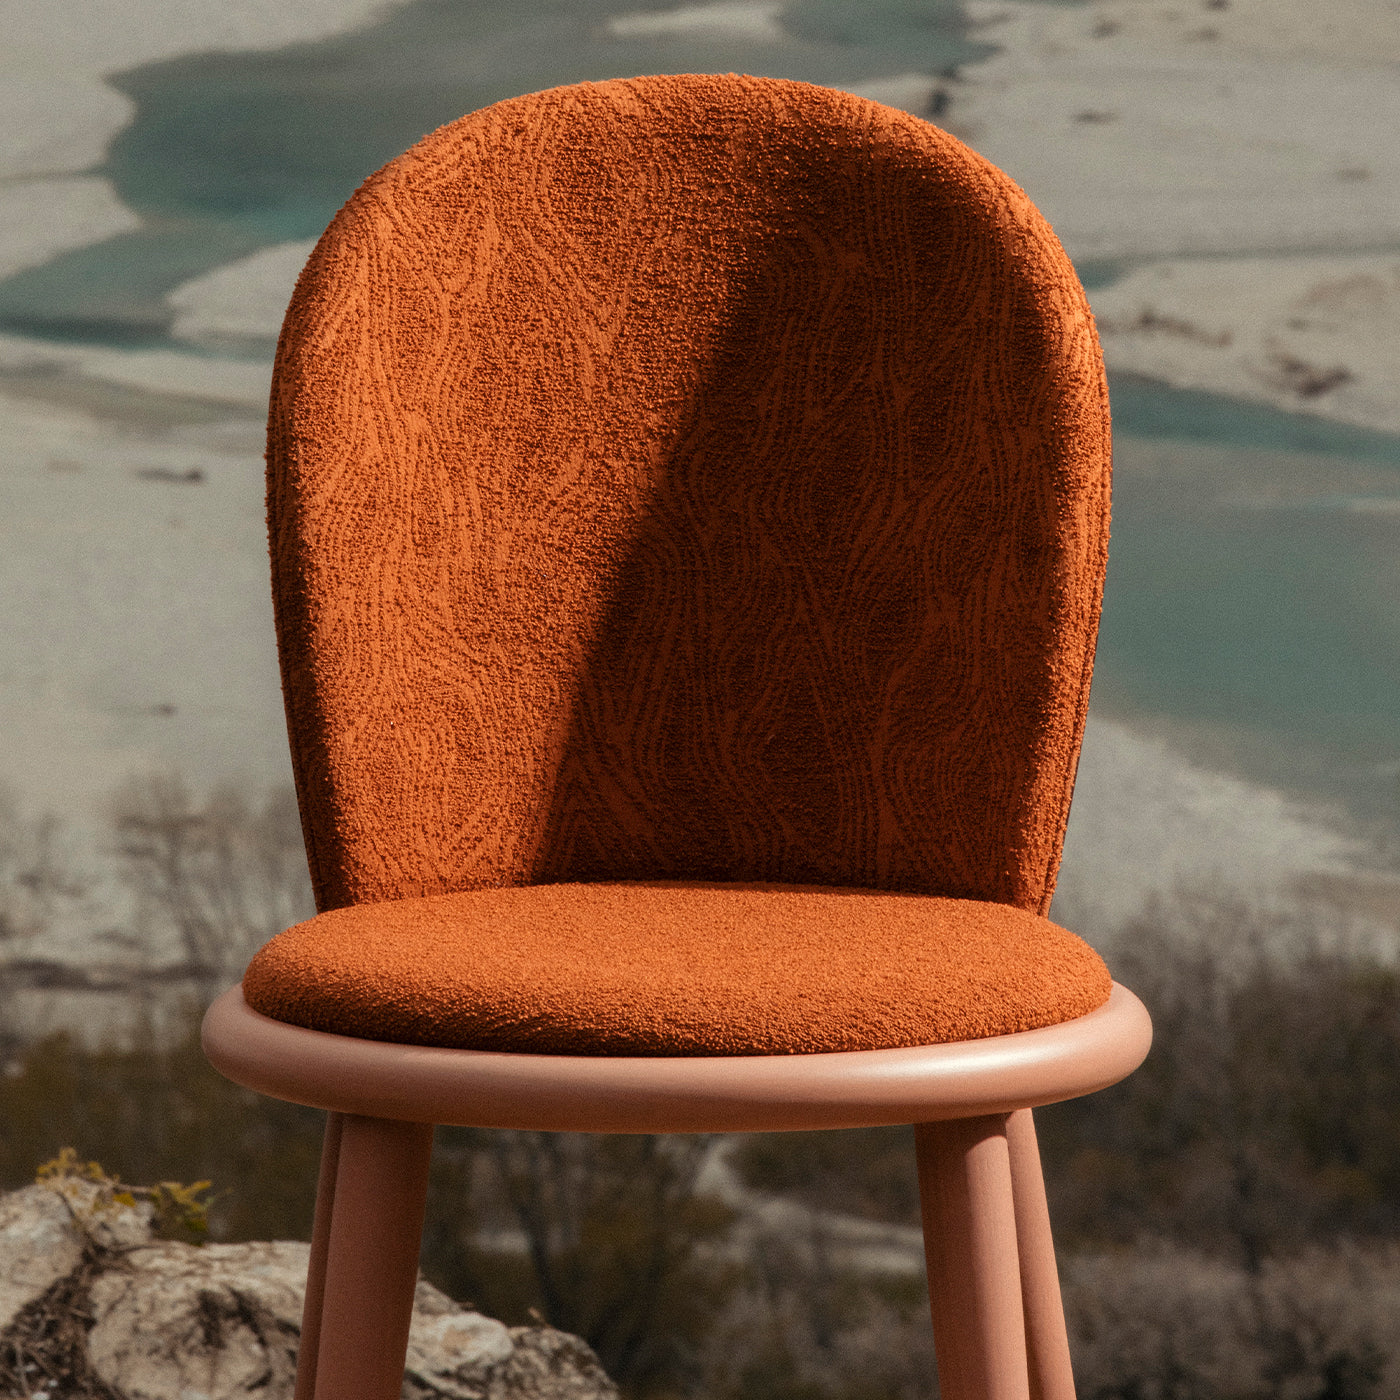 Veretta 921 Orange Chair by Cristina Celestino - Alternative view 2